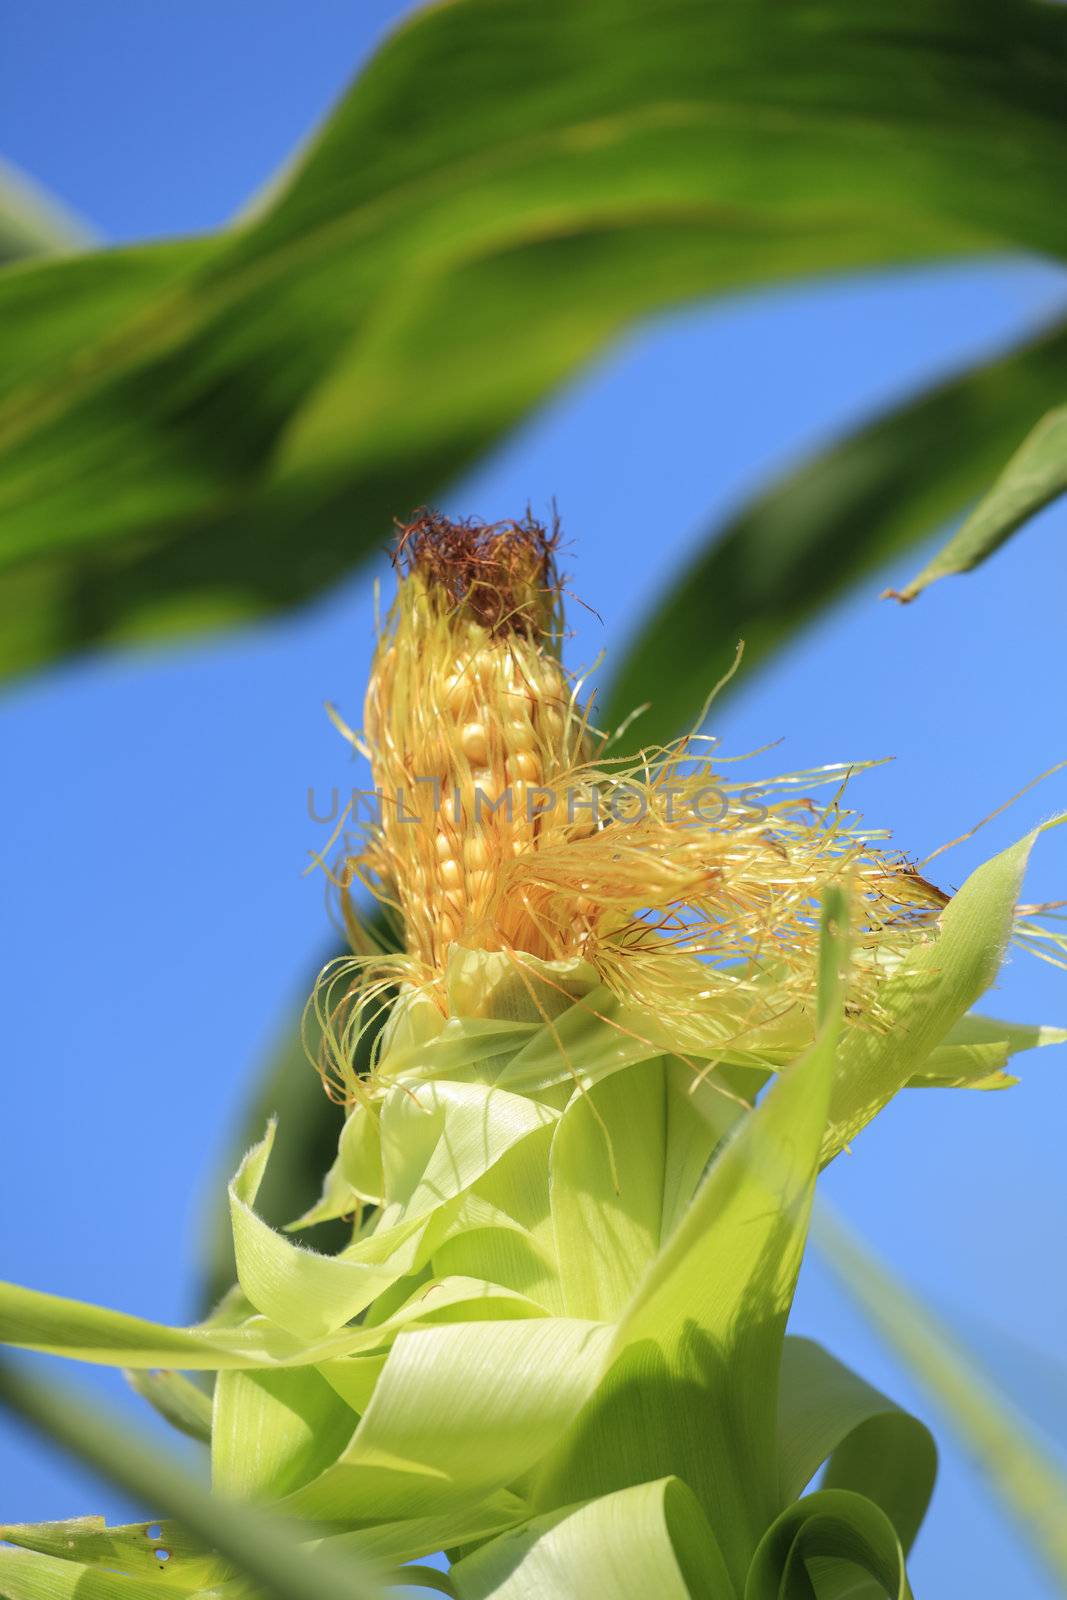 Corn on the cob in the sky